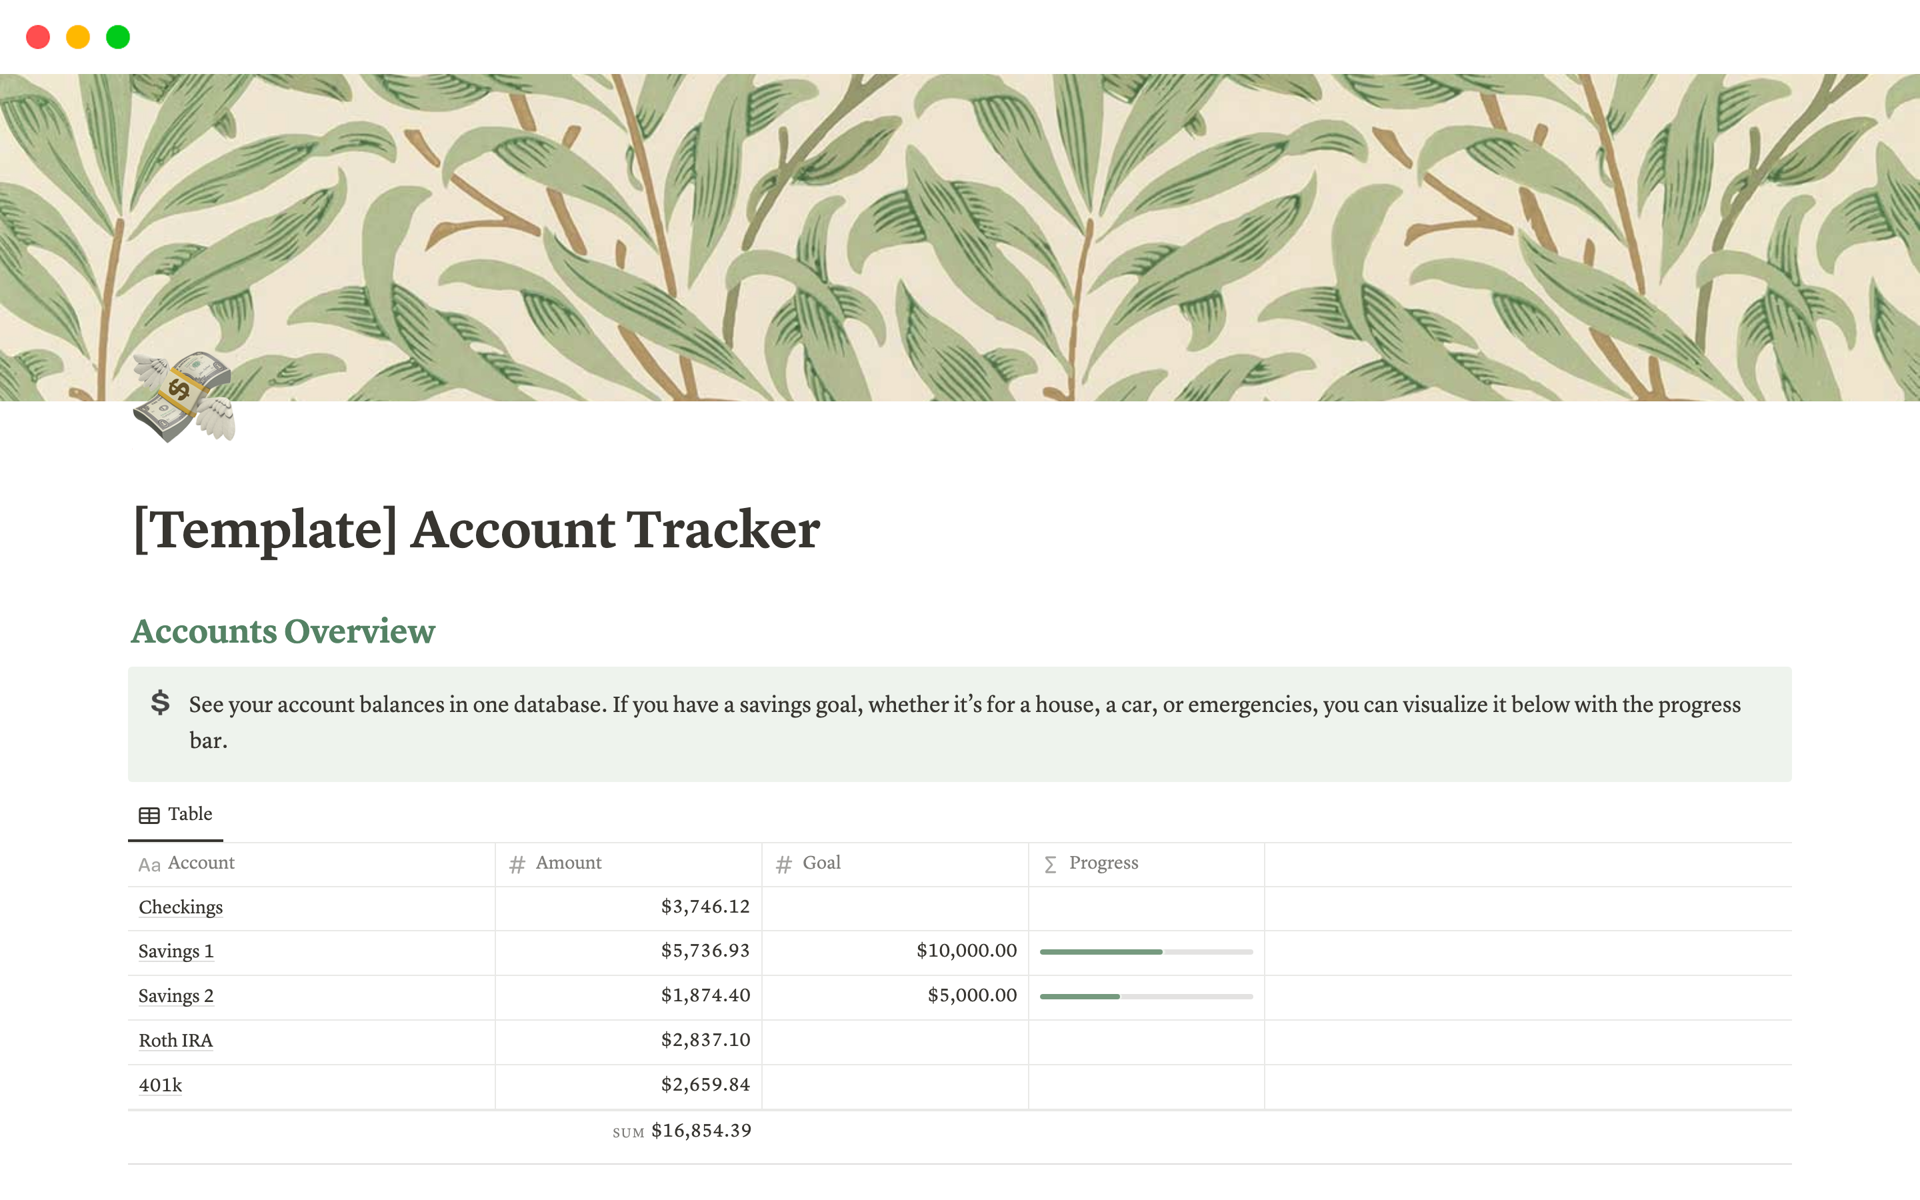 Aperçu du modèle de Account Tracker